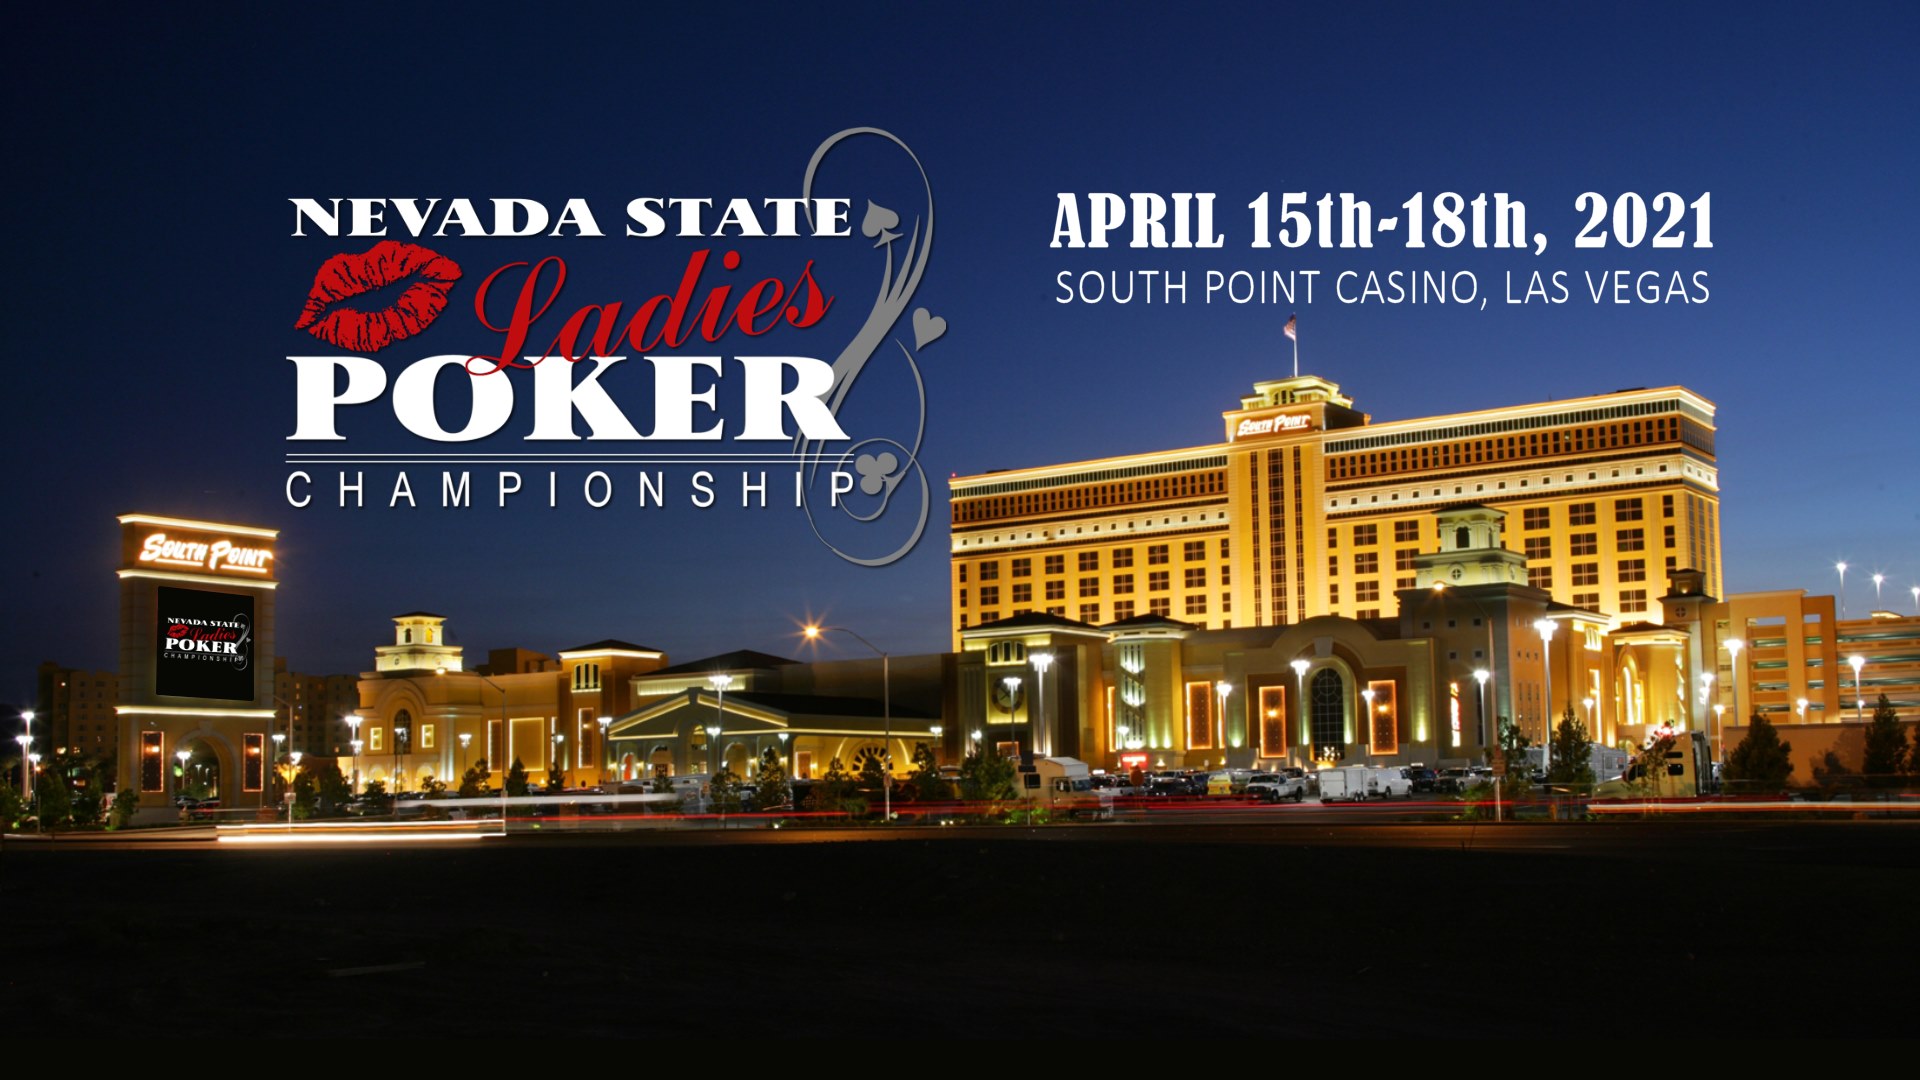 LIPS Tour Returns with Nevada State Ladies Poker Championship